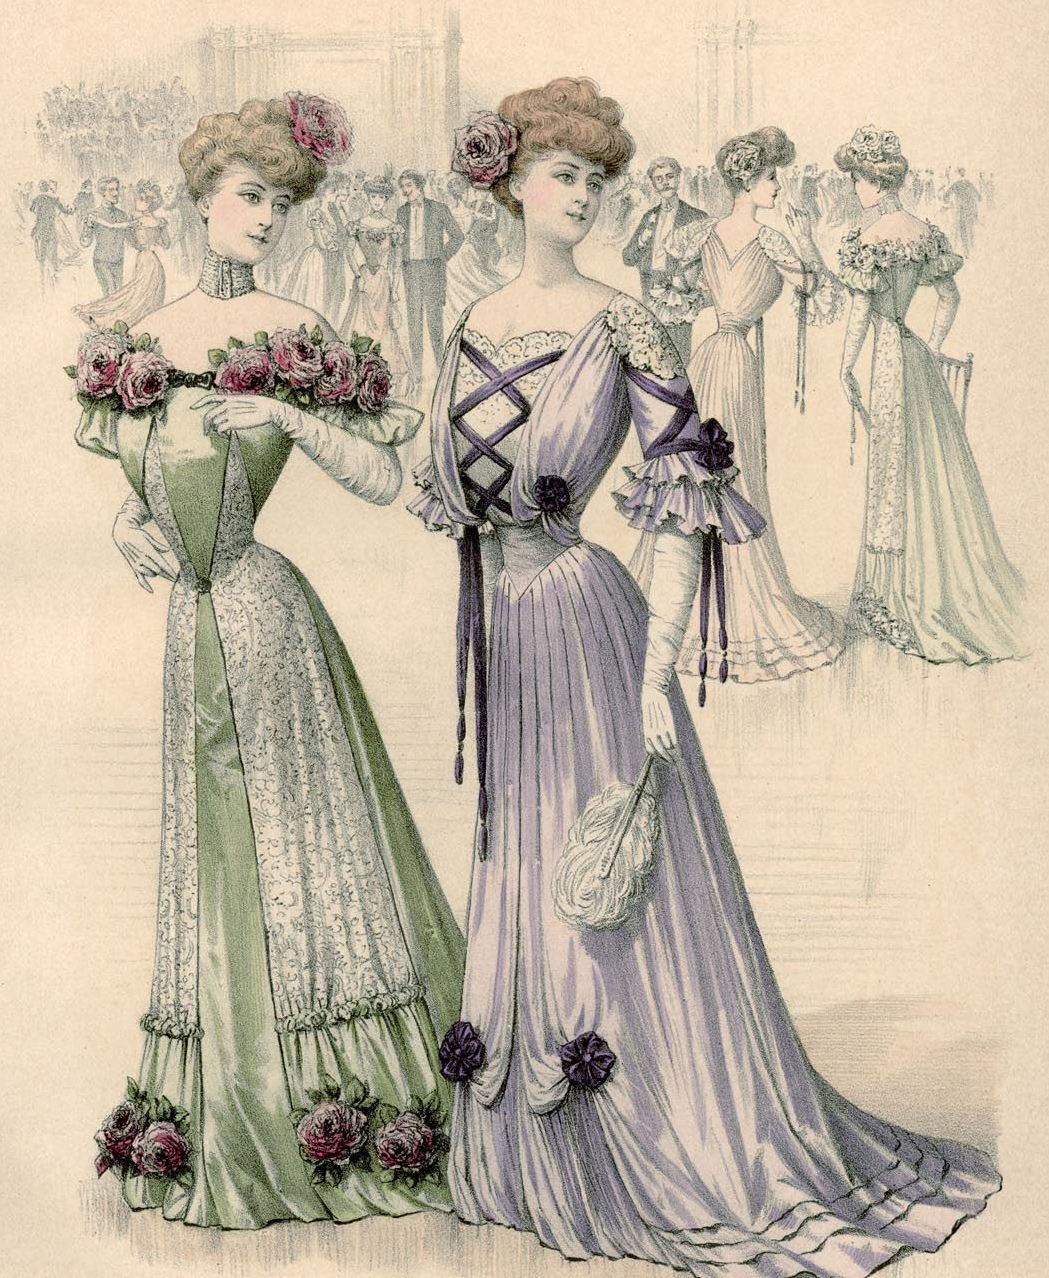 Мода Эдвардианская эпоха 1900